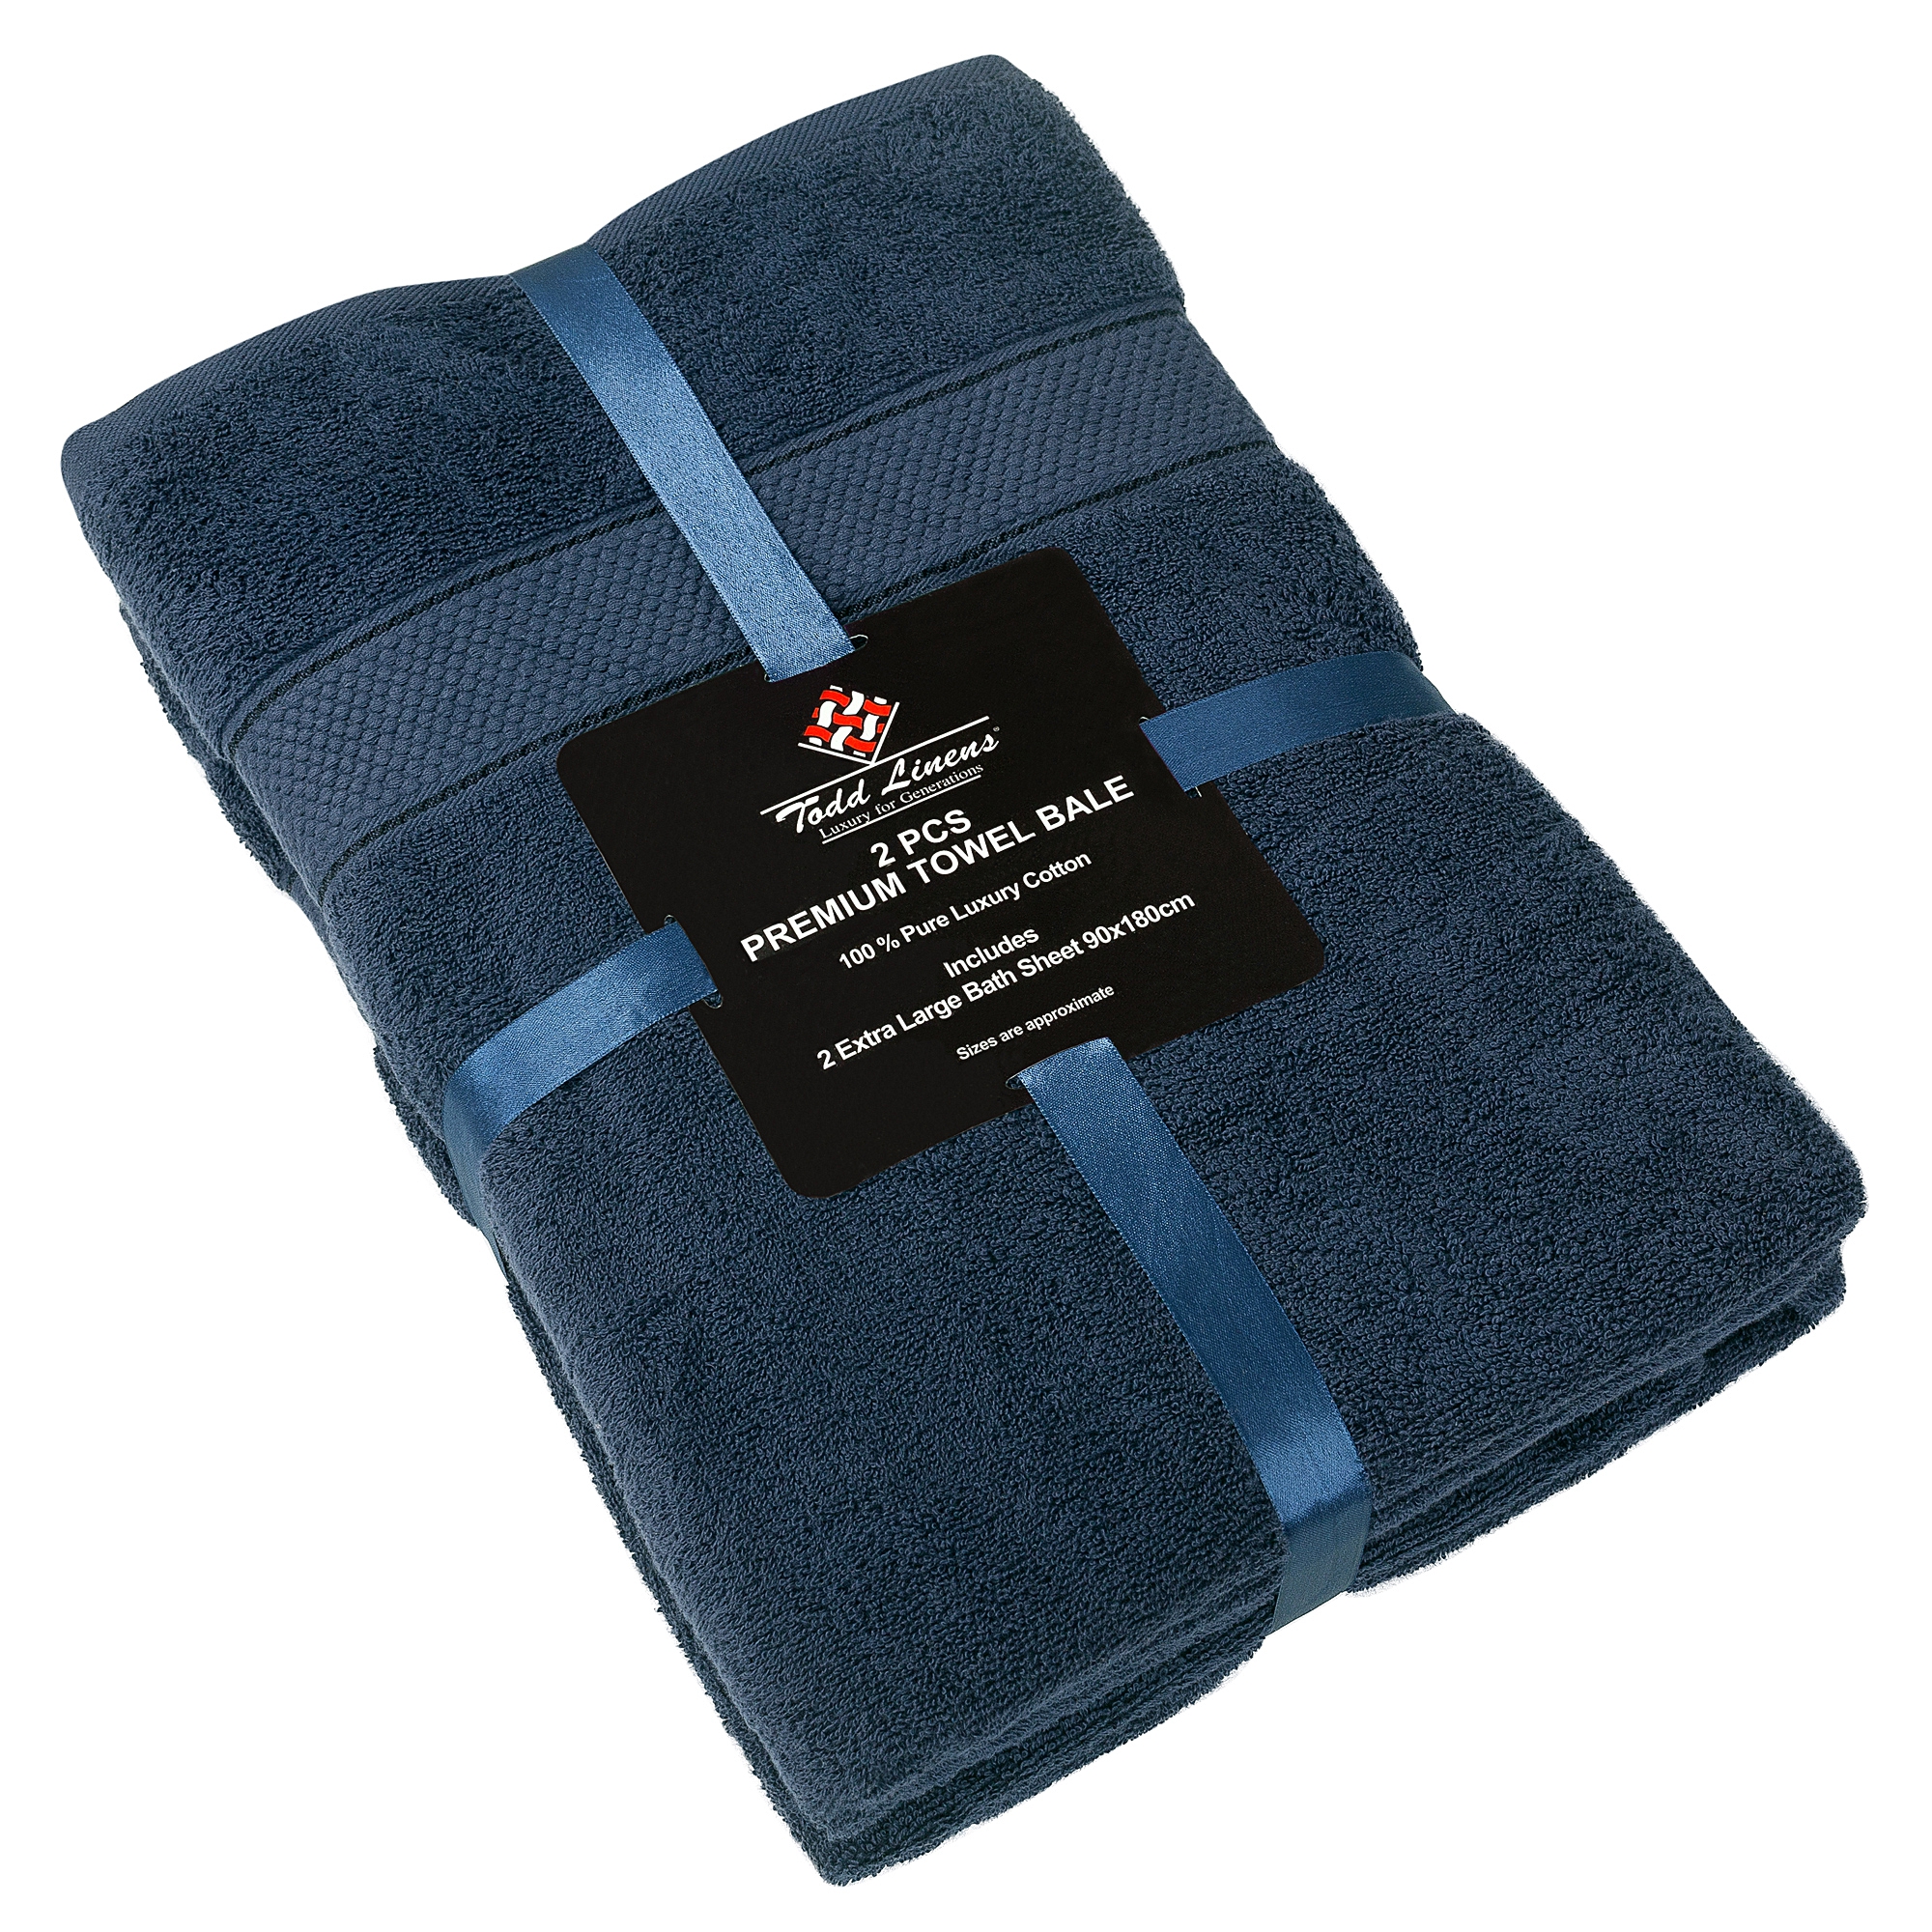 Bale Set 2pcs Dark Navy Premium Plain Extra Large Bath Sheet Towel